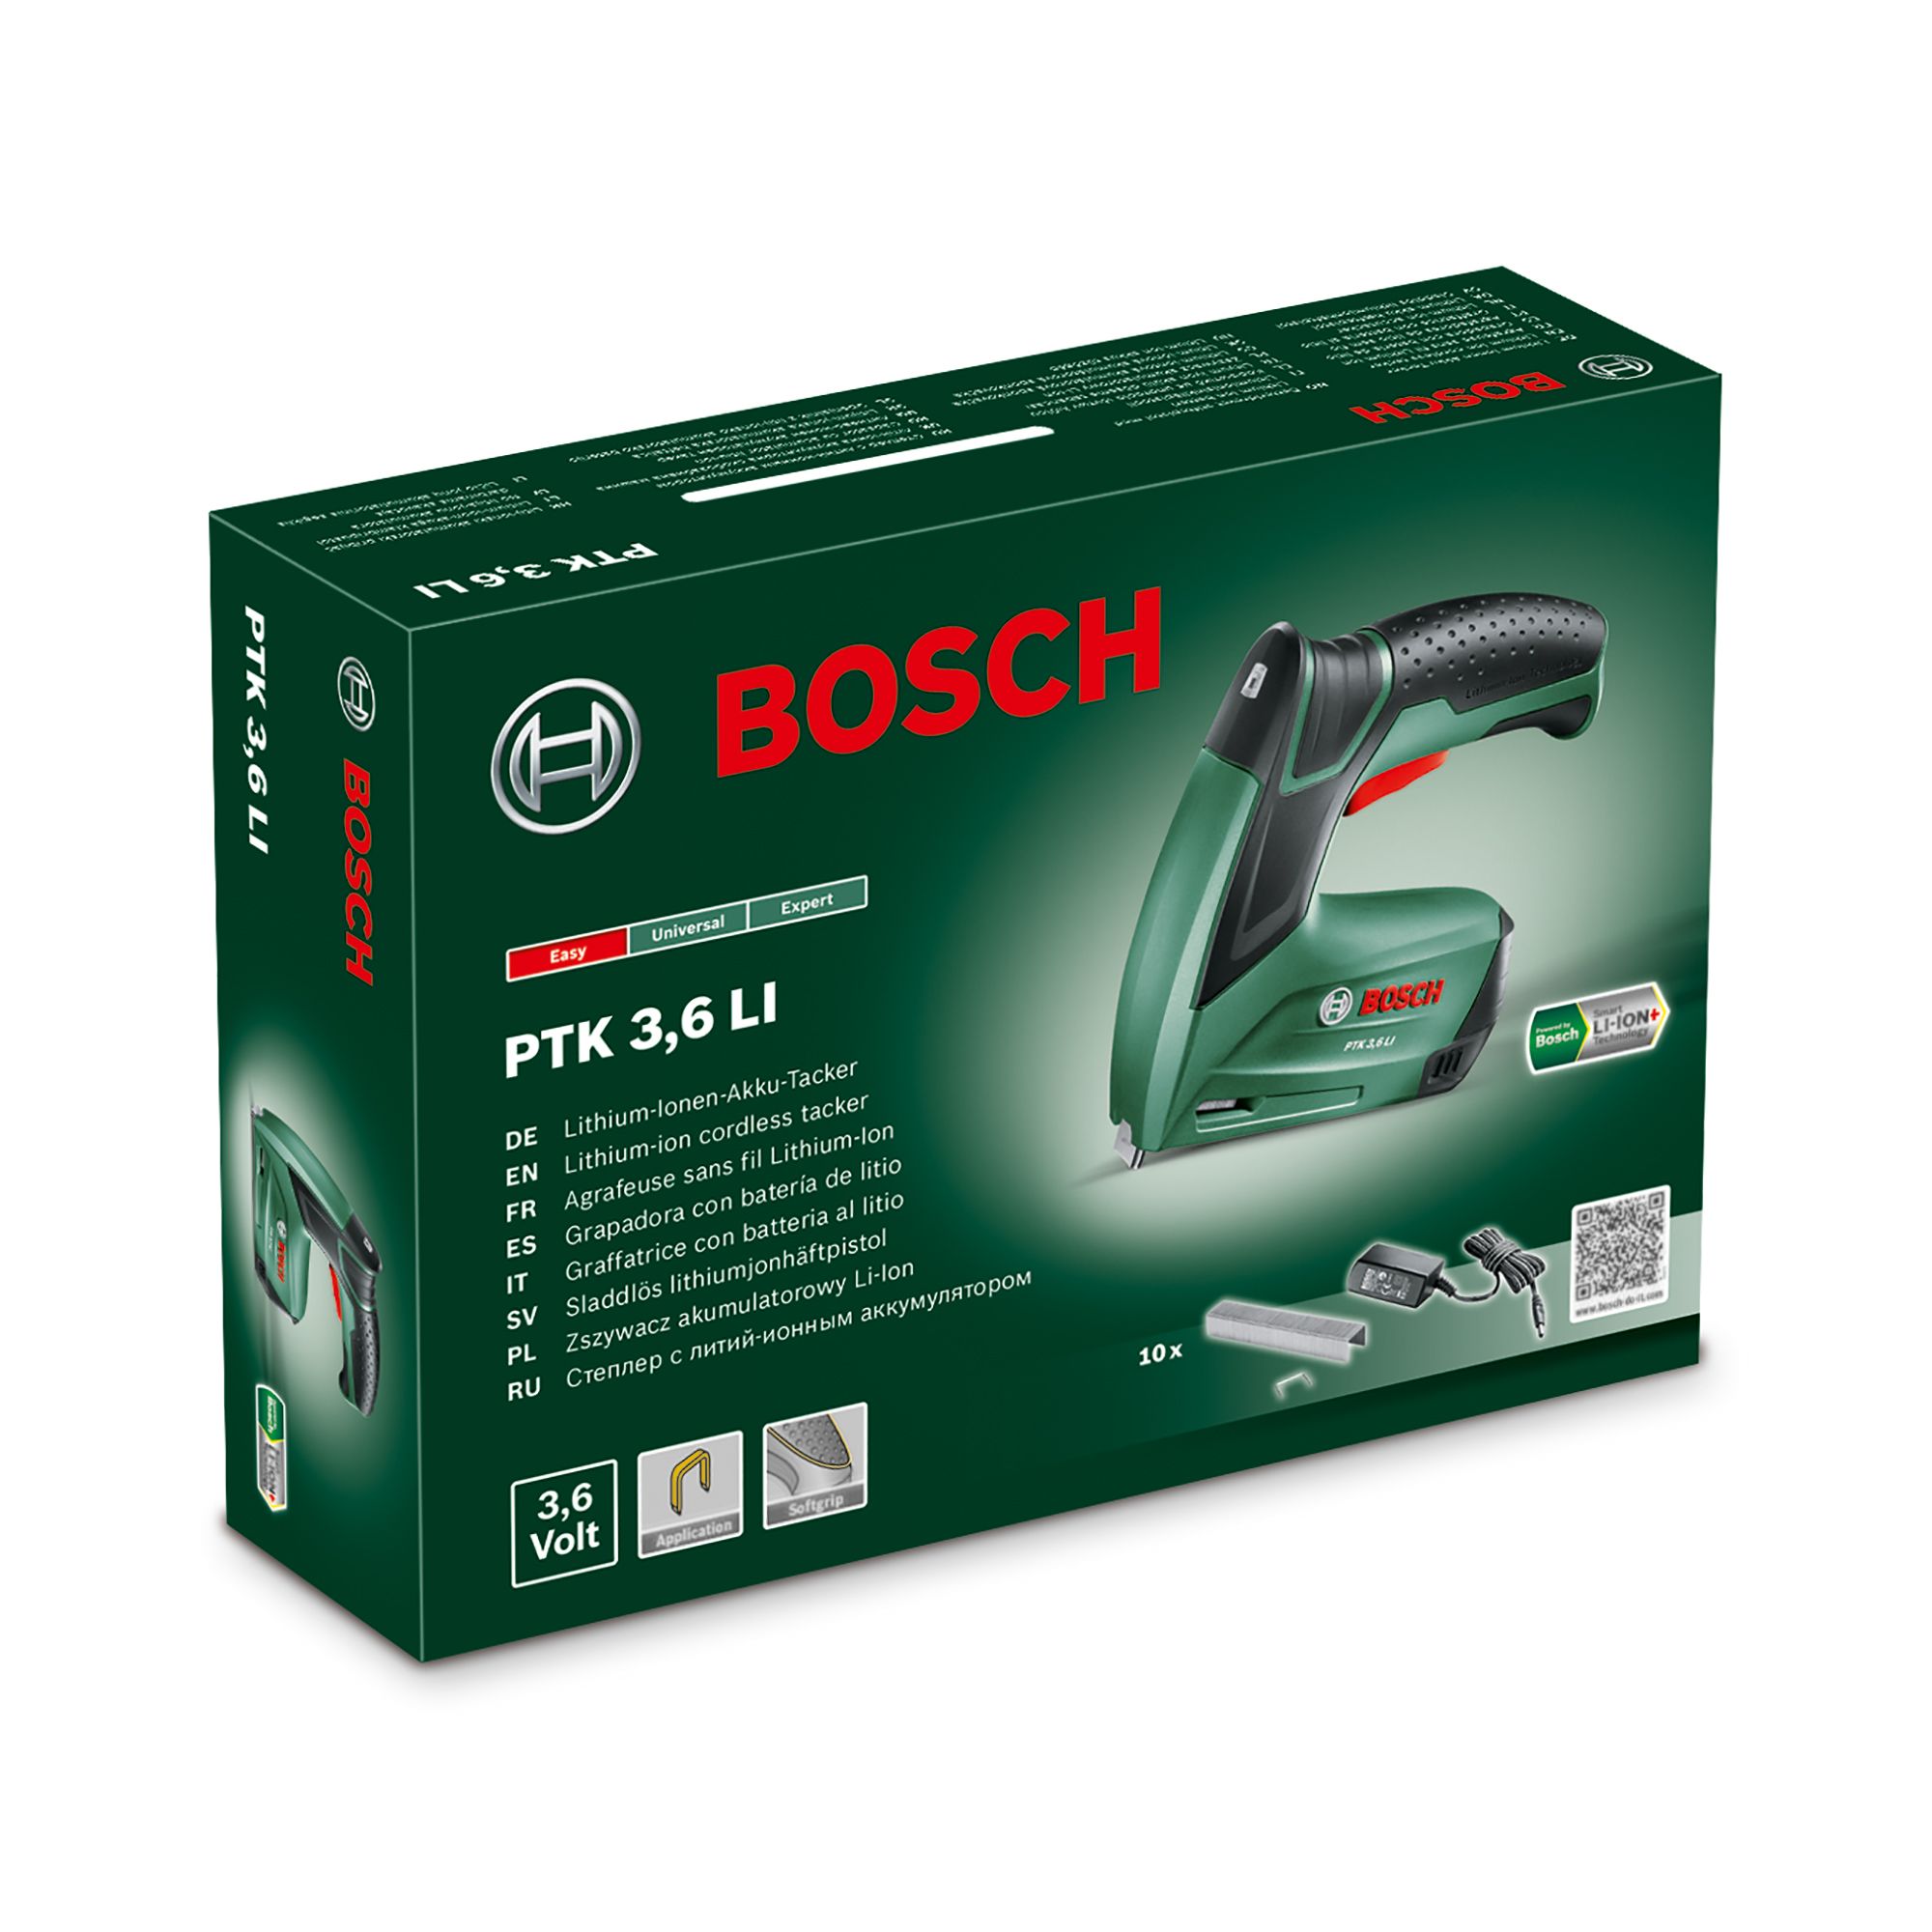 Bosch 3.6V 10mm 1 x 1.5 Li-ion Cordless Straight Stapler PTK 3,6 LI